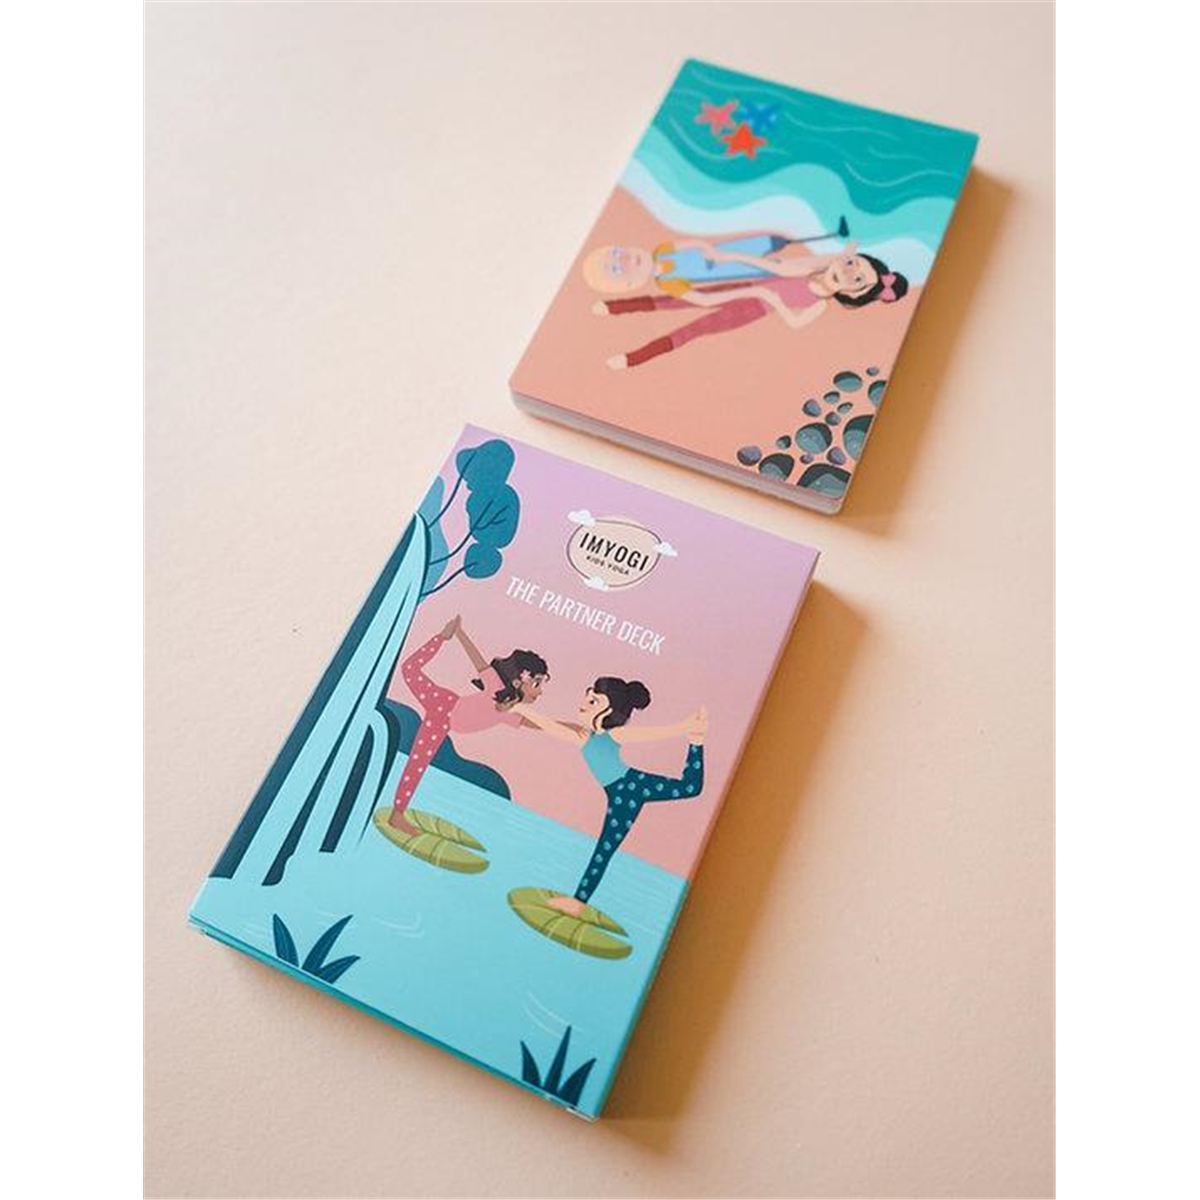 IMYOGI - Partner Yoga cards for kids